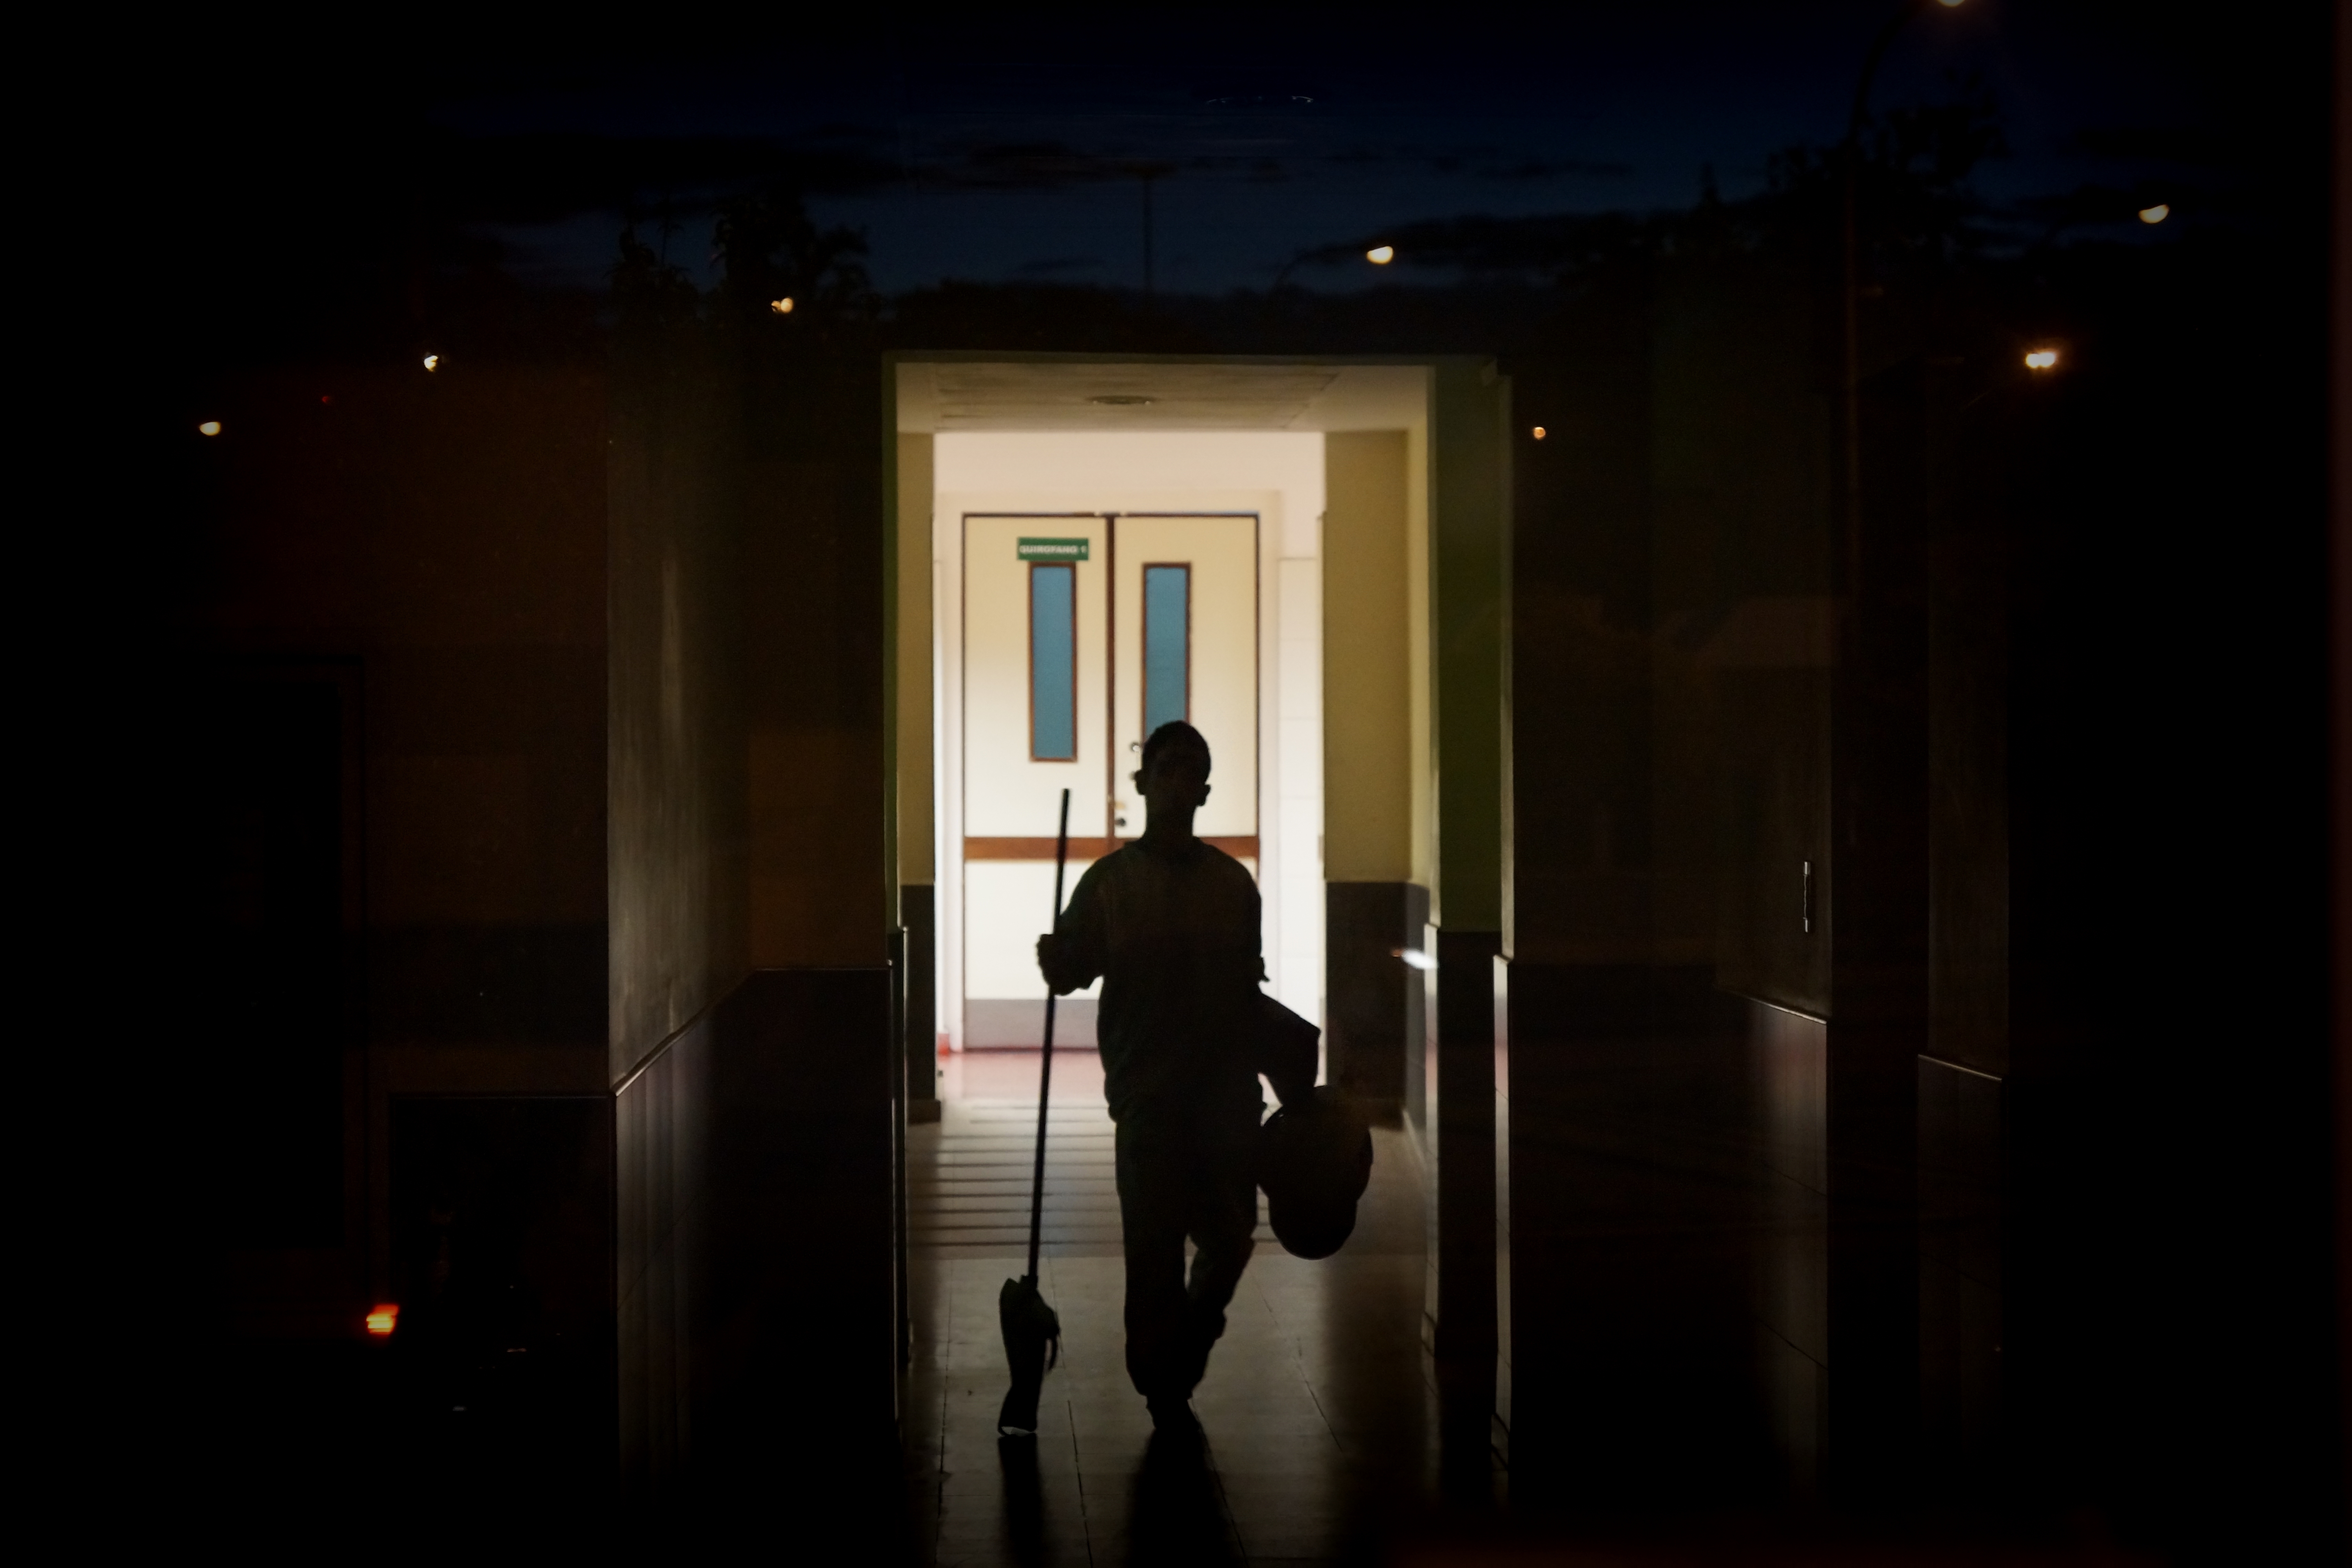 Worker holding a mop walks down a dark hallway